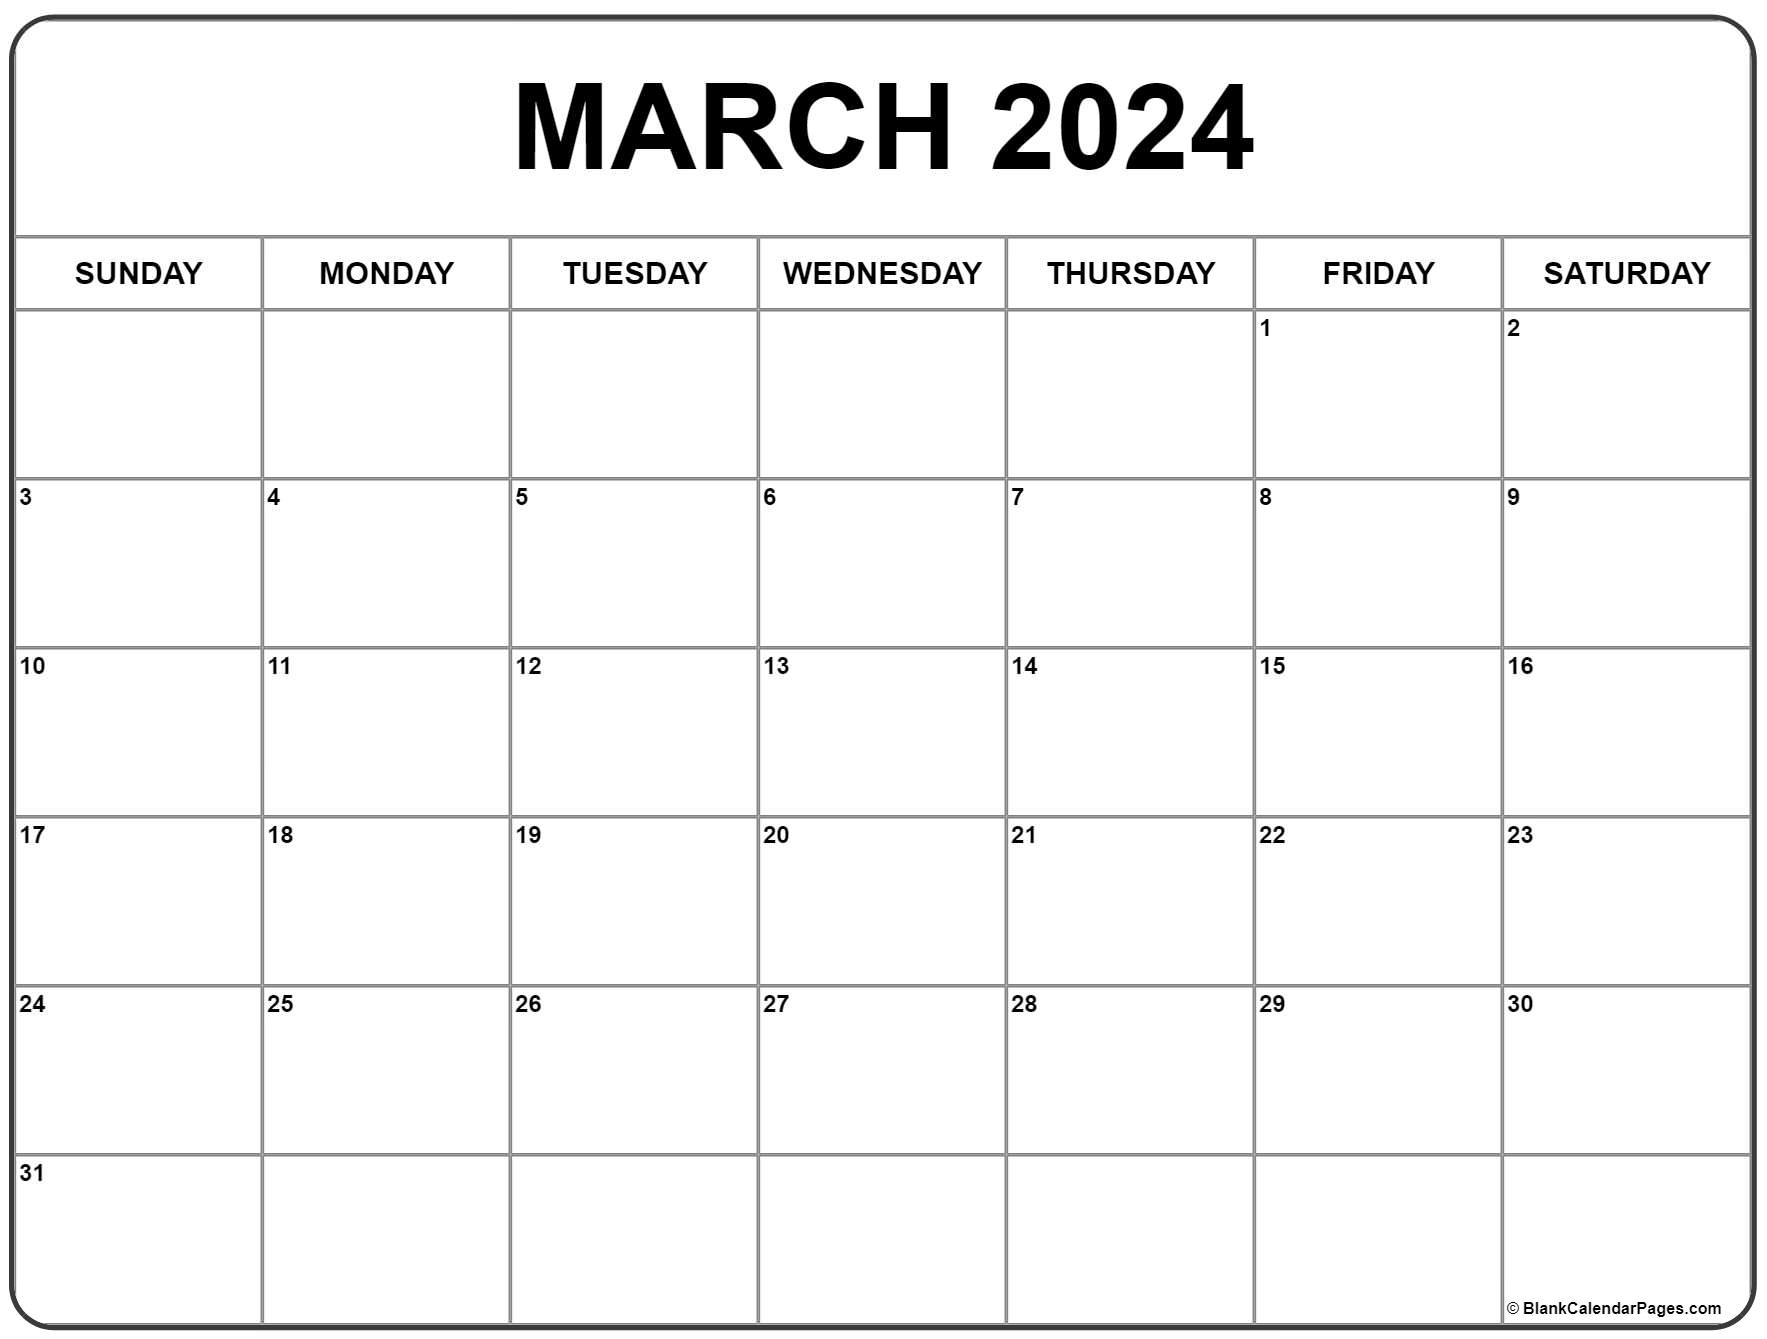 March 2024 Calendar | Free Printable Calendar for A-Printable-Calendar March 2024